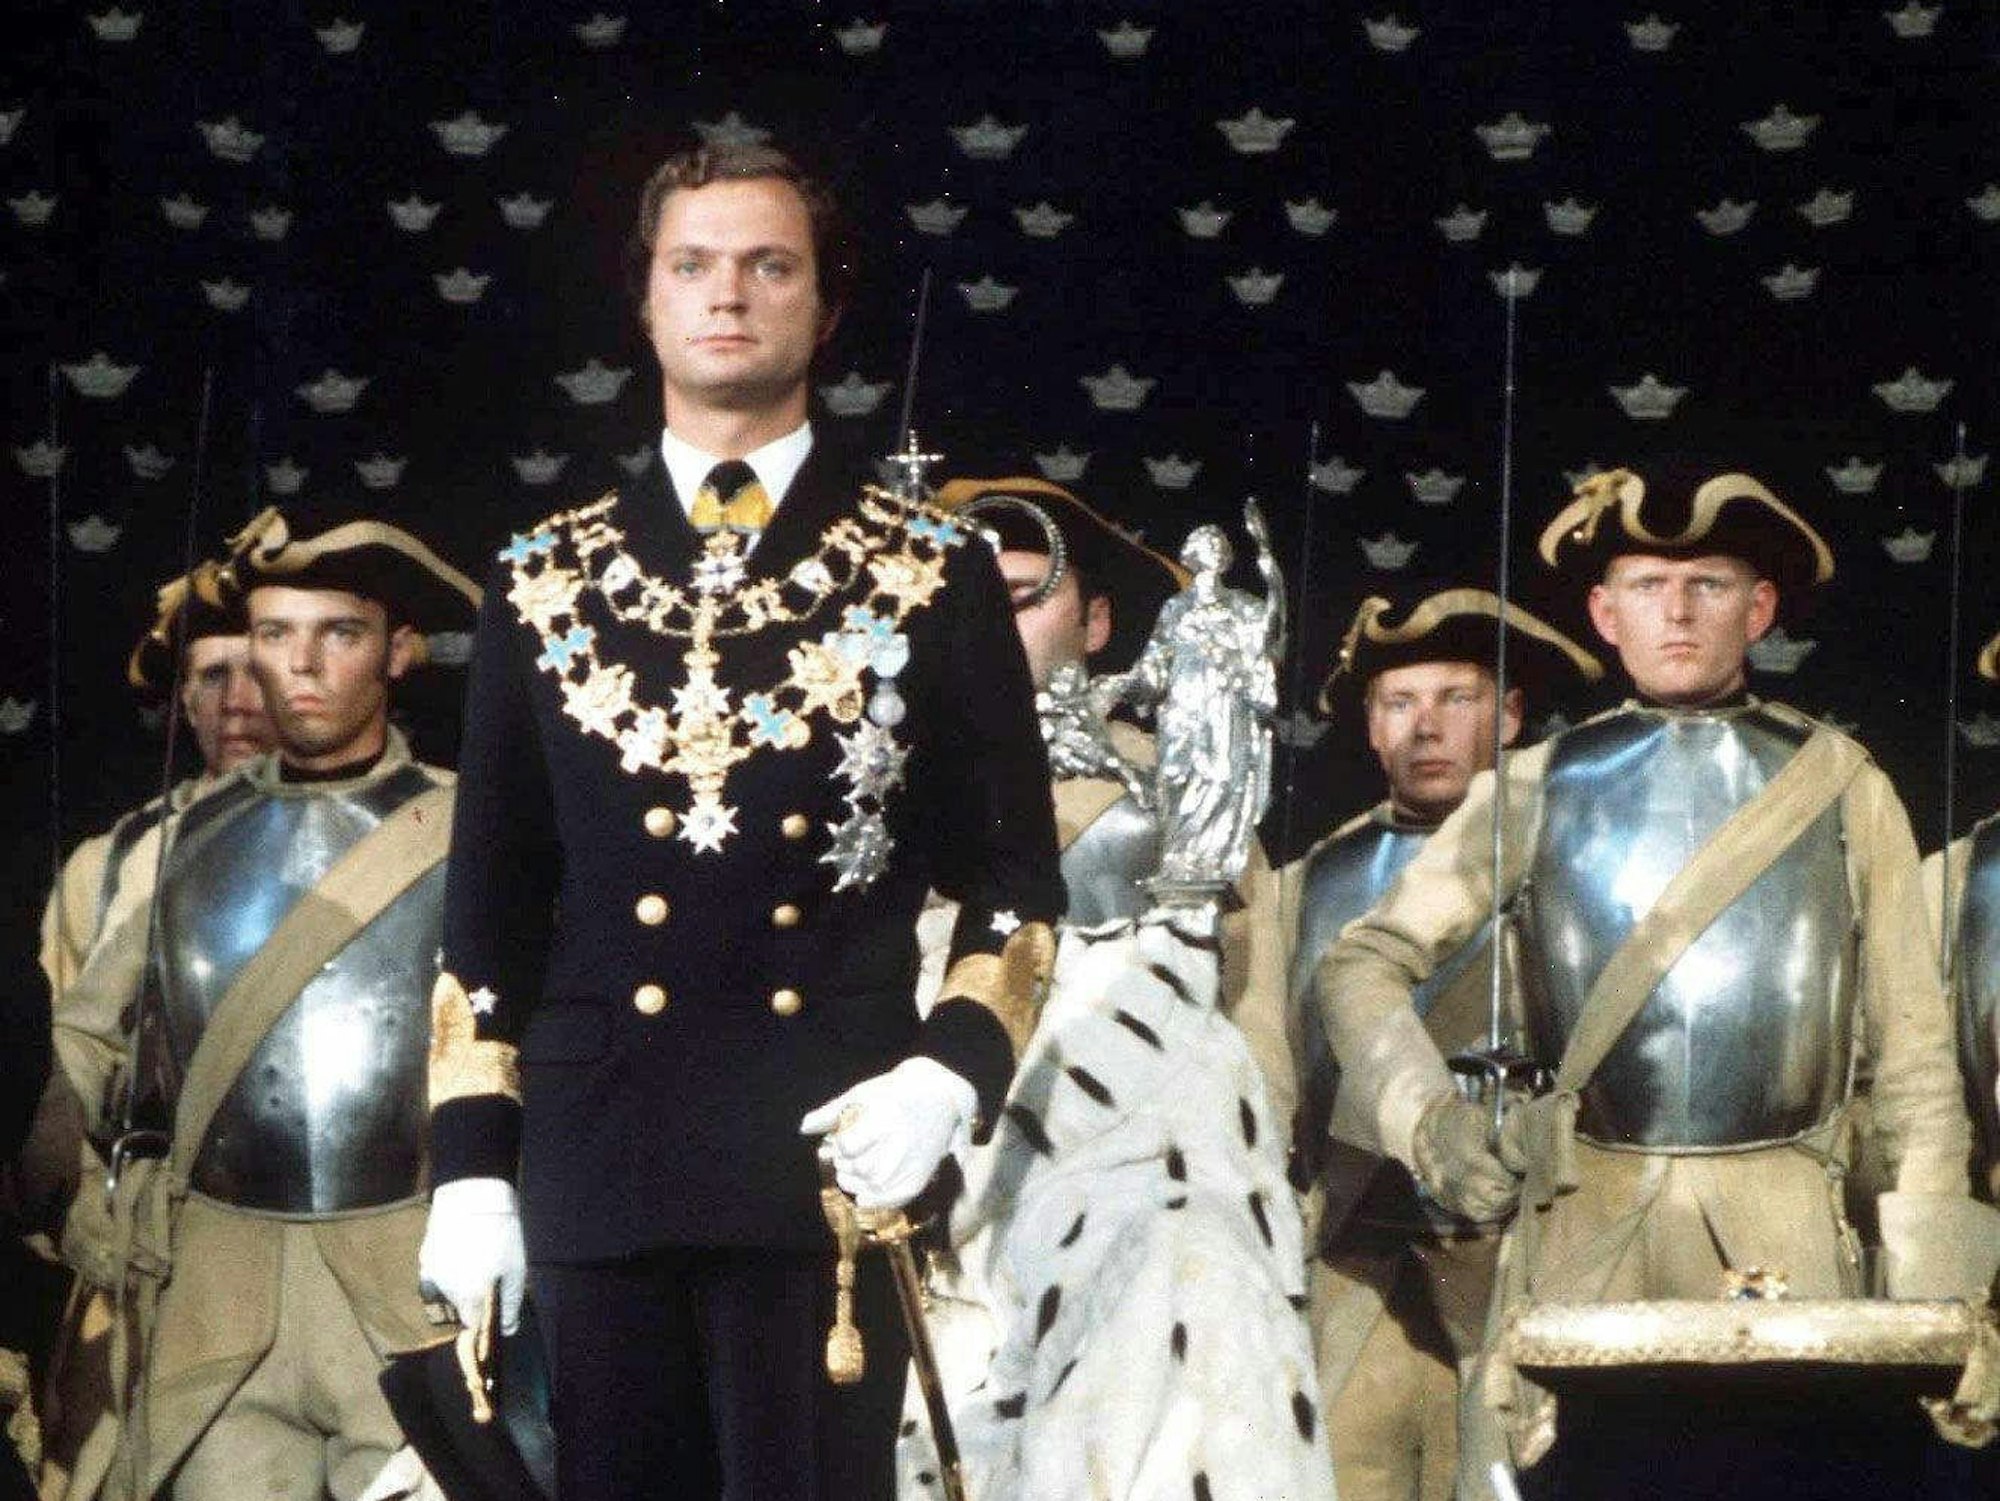 Schwedens König Carl XVI. Gustaf in voller Admiralsuniform